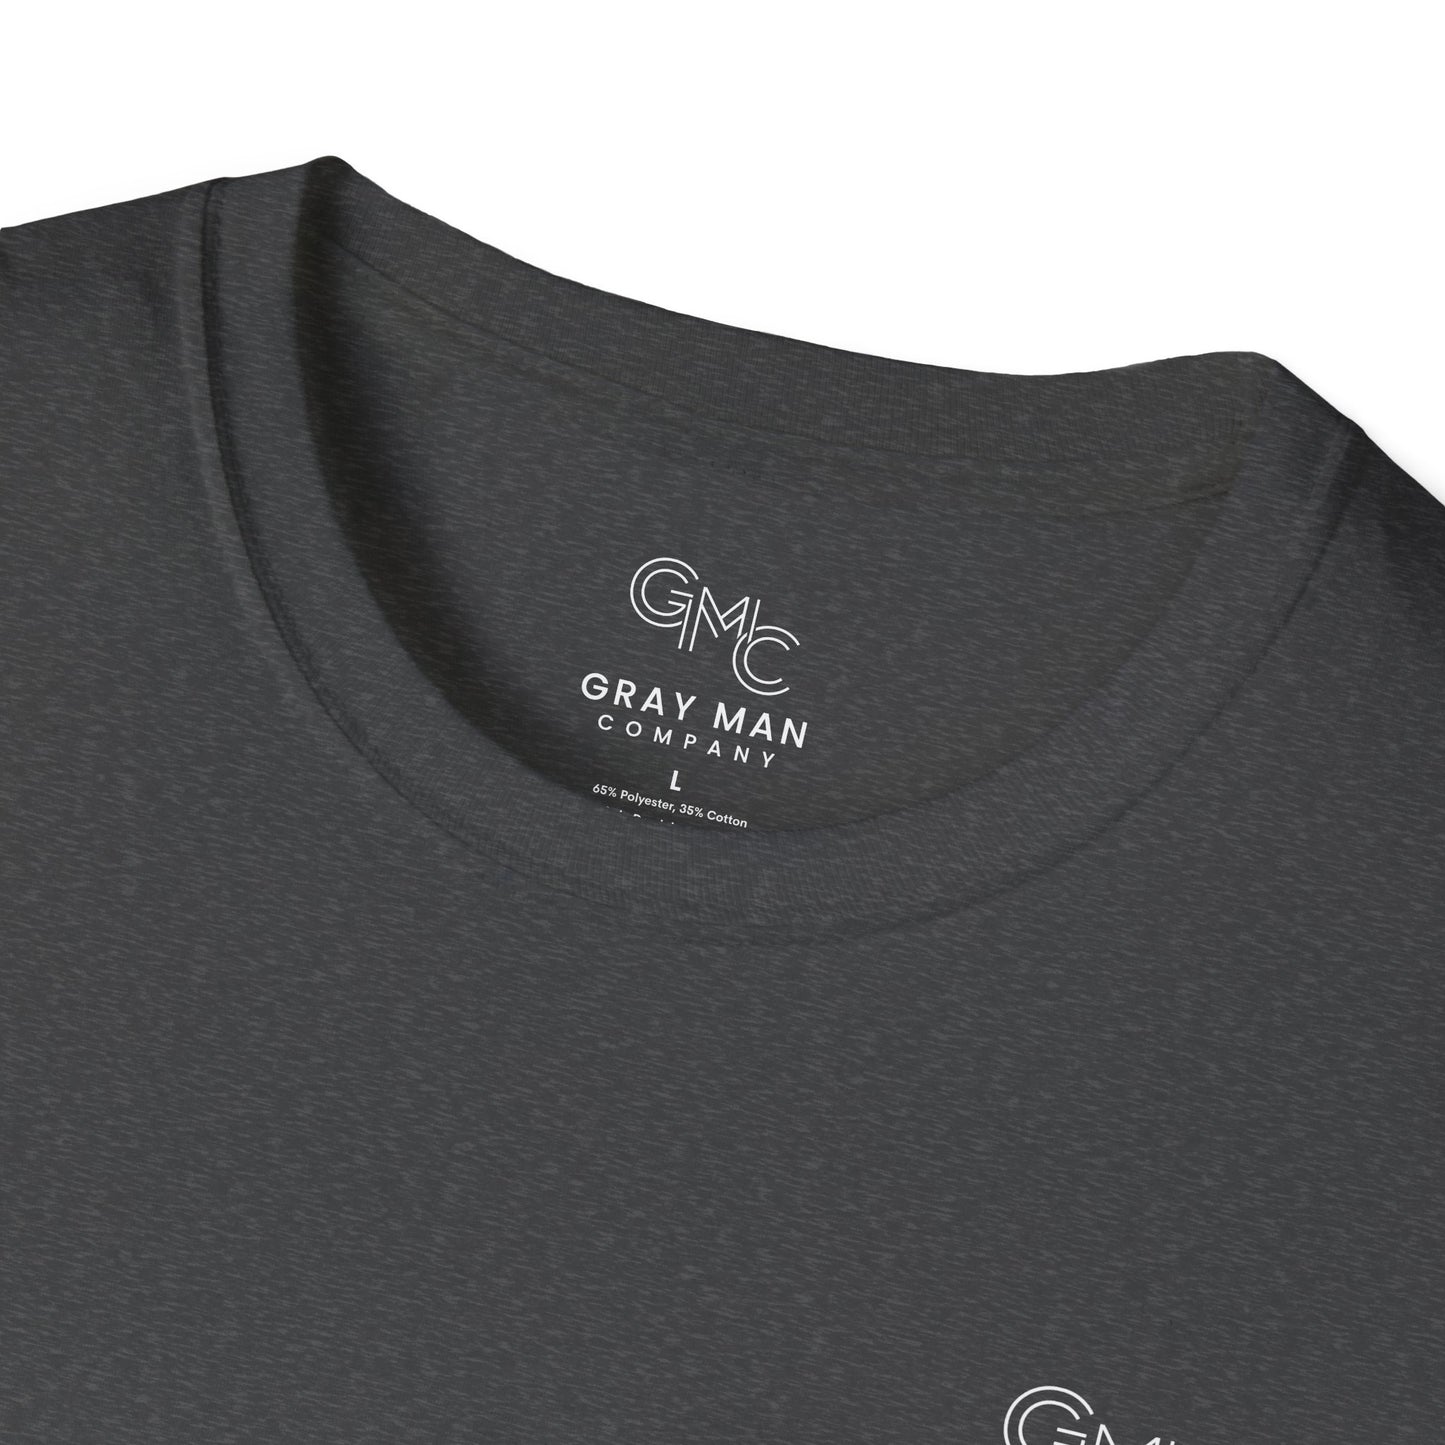 EDC Graphic T-Shirt - UNCORRUPT THREE LETTER AGENCIES